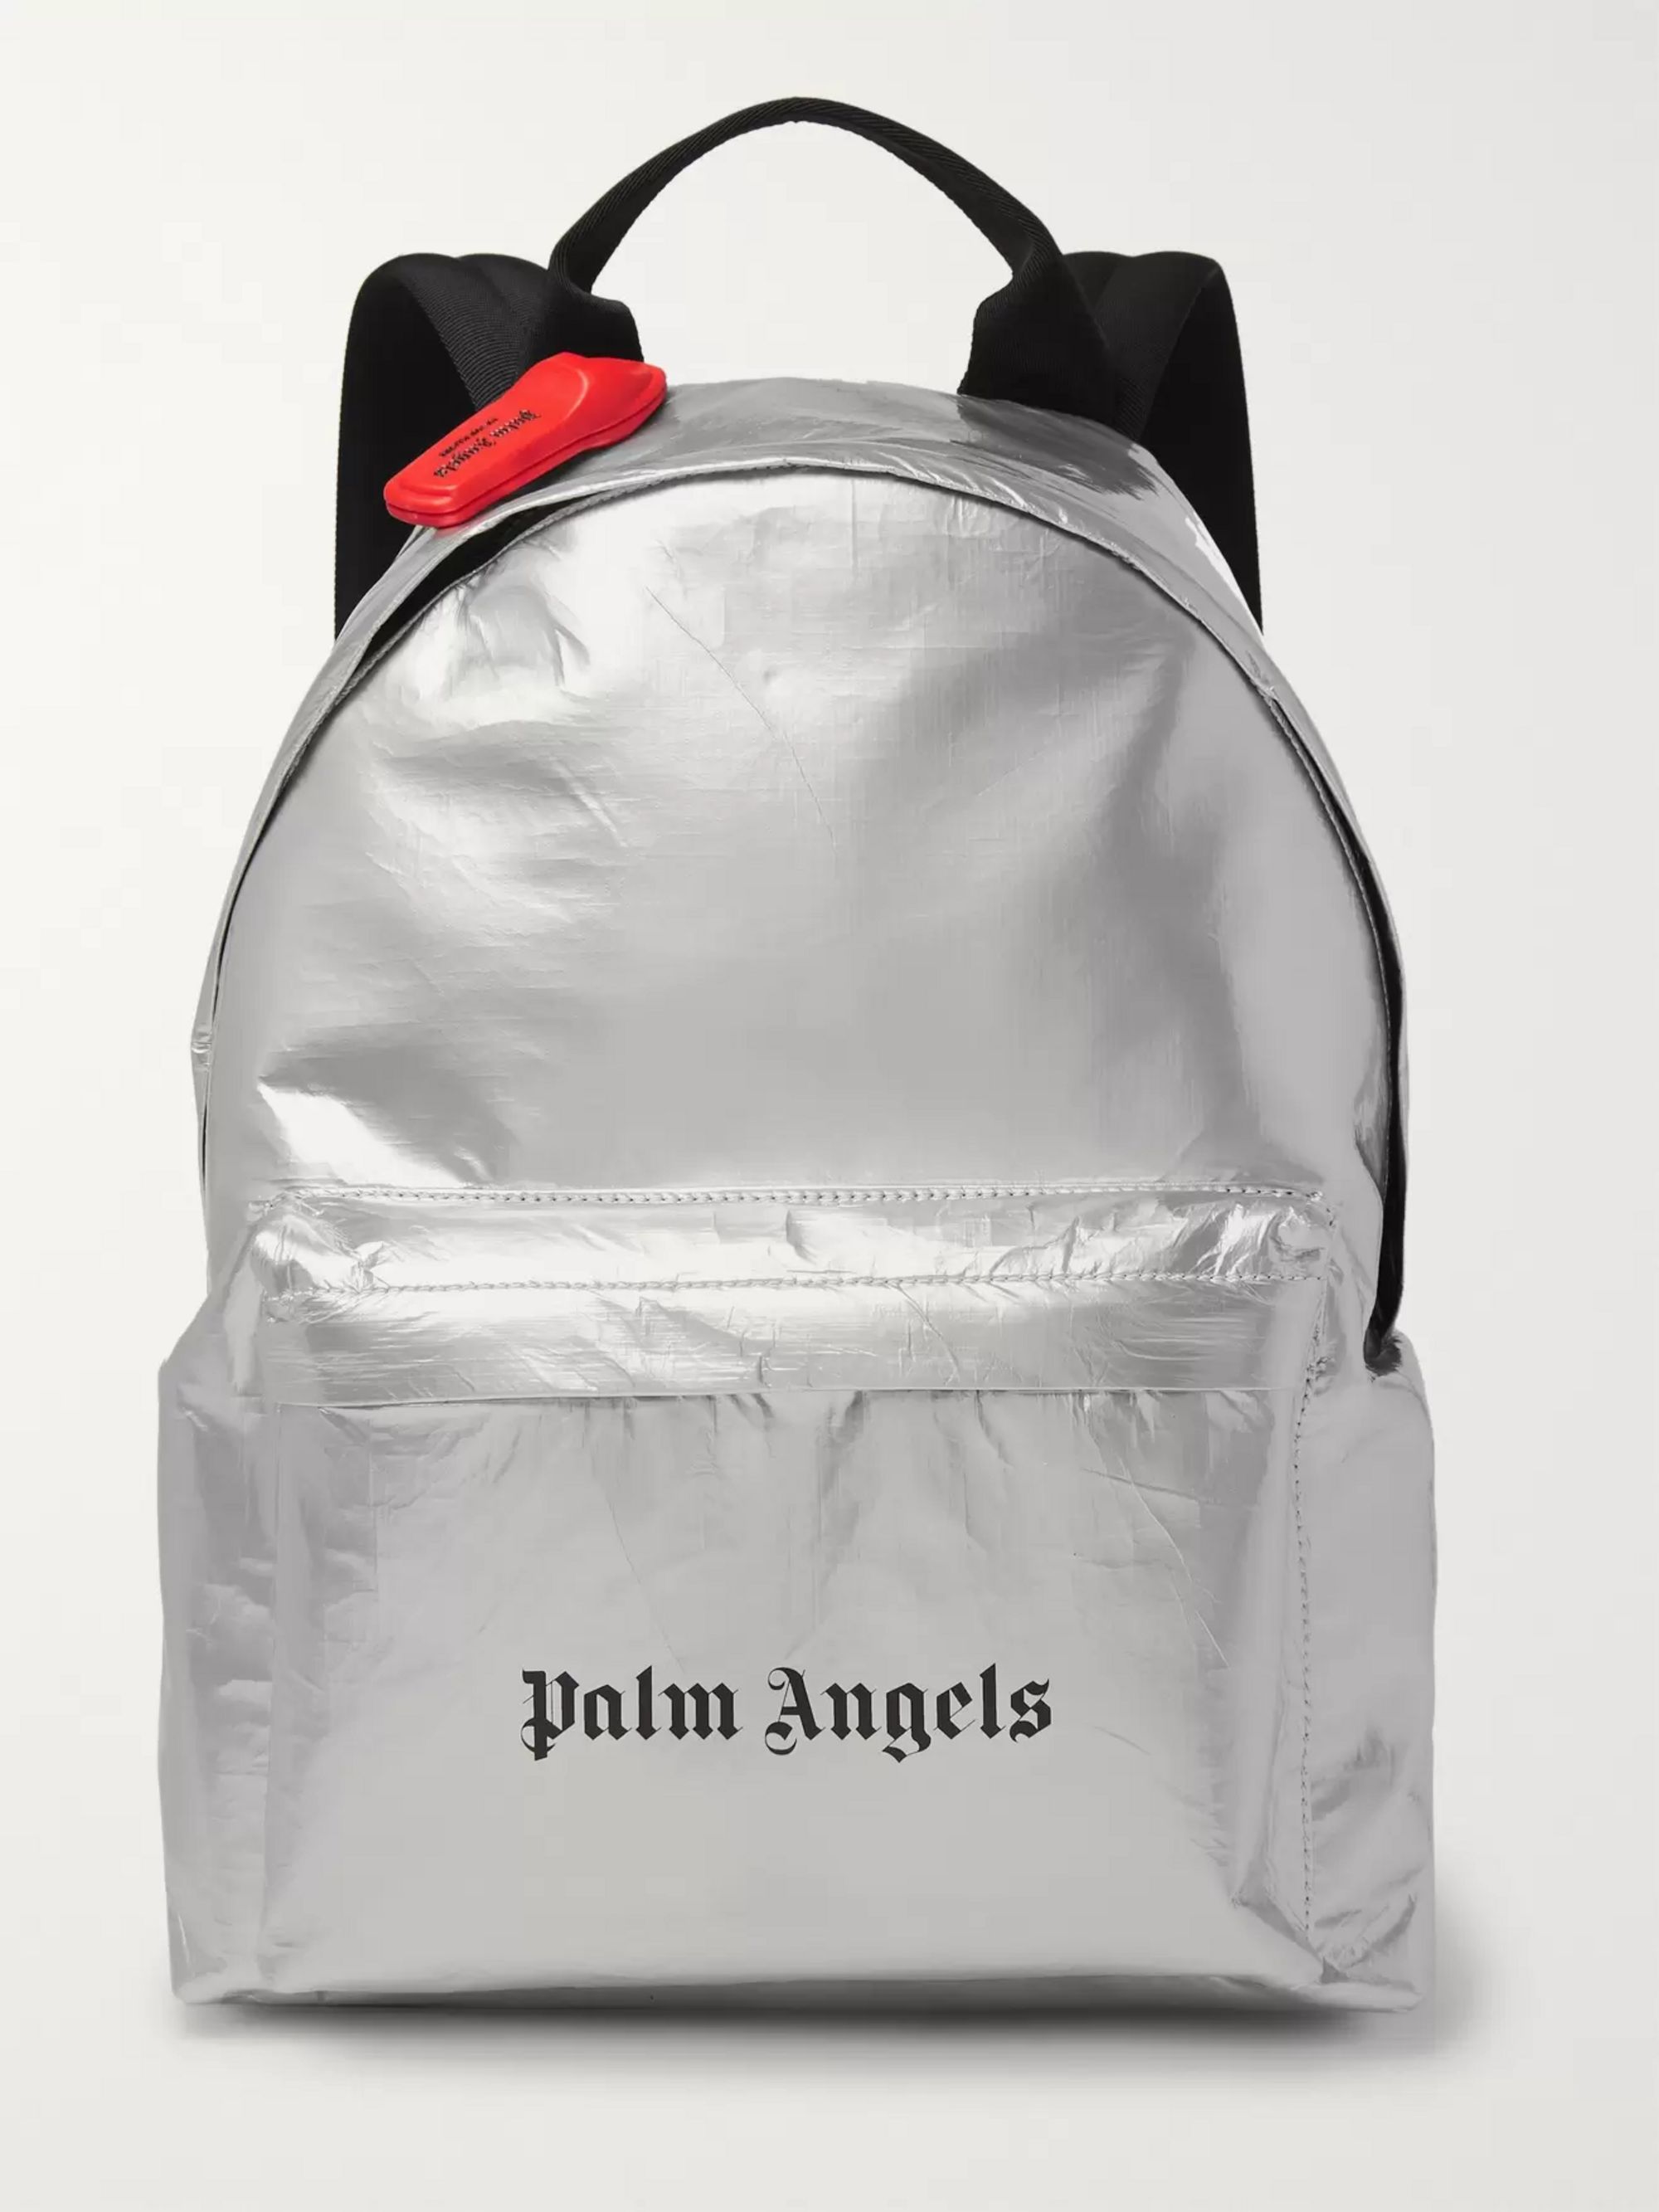 Bags for Men | Designer Accessories | MR PORTER